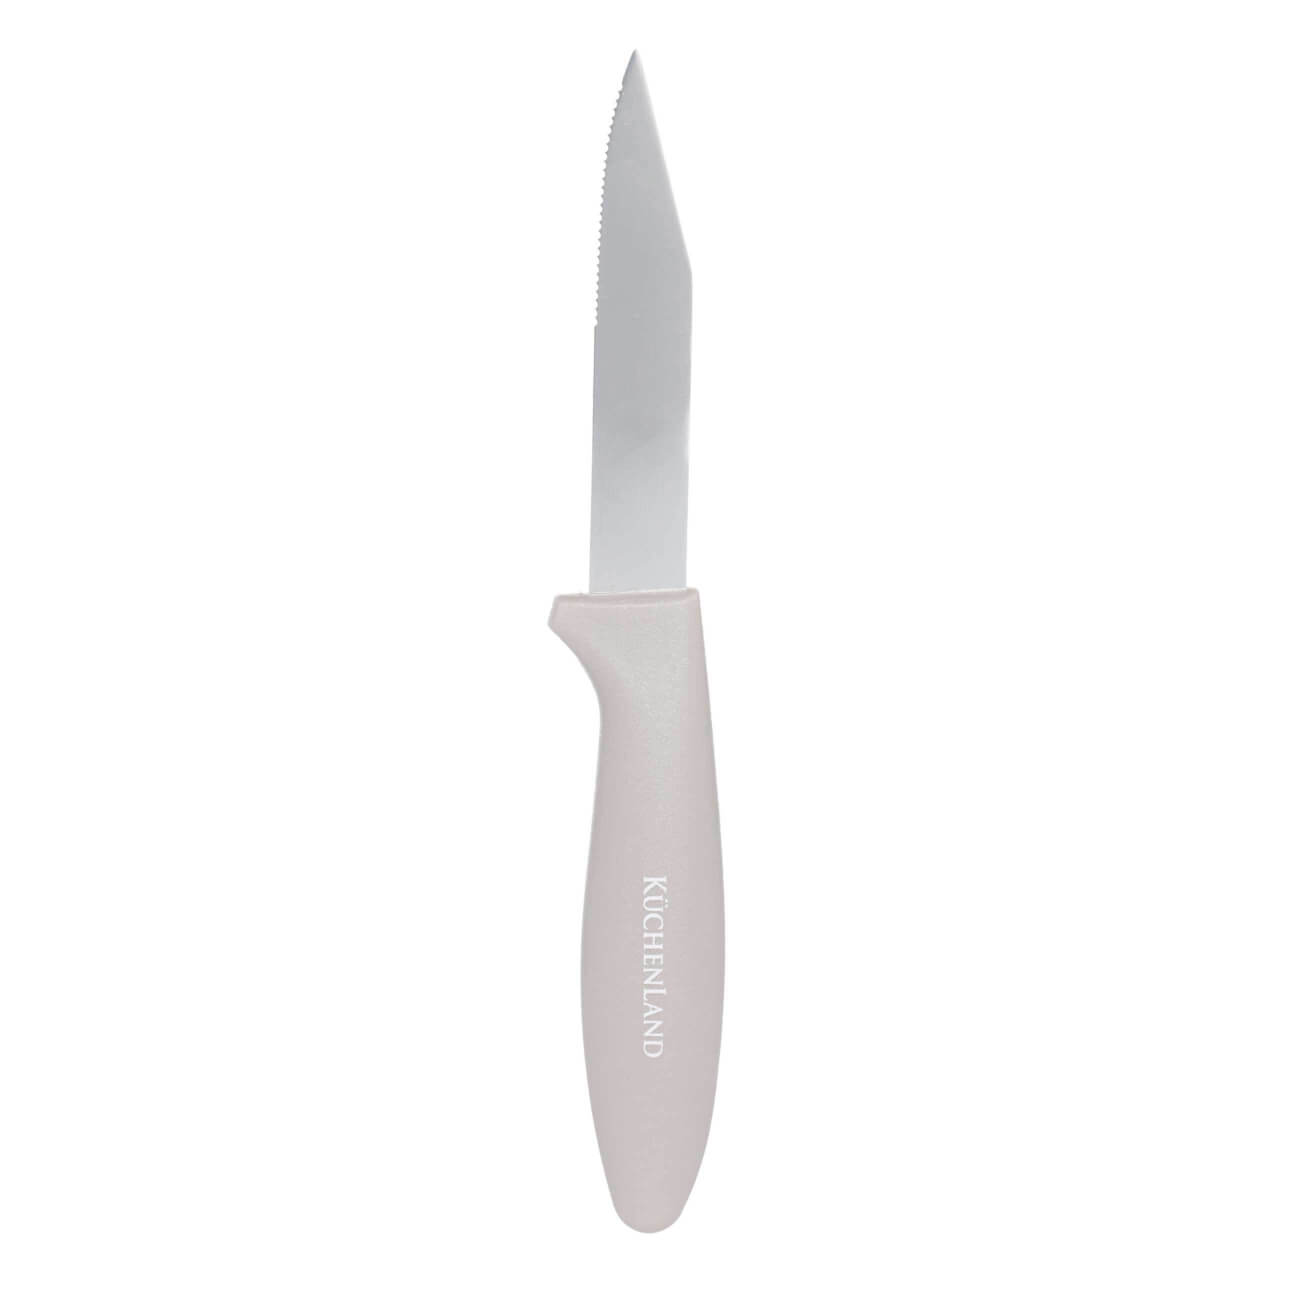 Нож для чистки овощей, 8 см, сталь/пластик, серо-коричневый, Regular нож для чистки овощей 8 см сталь пластик серо коричневый regular